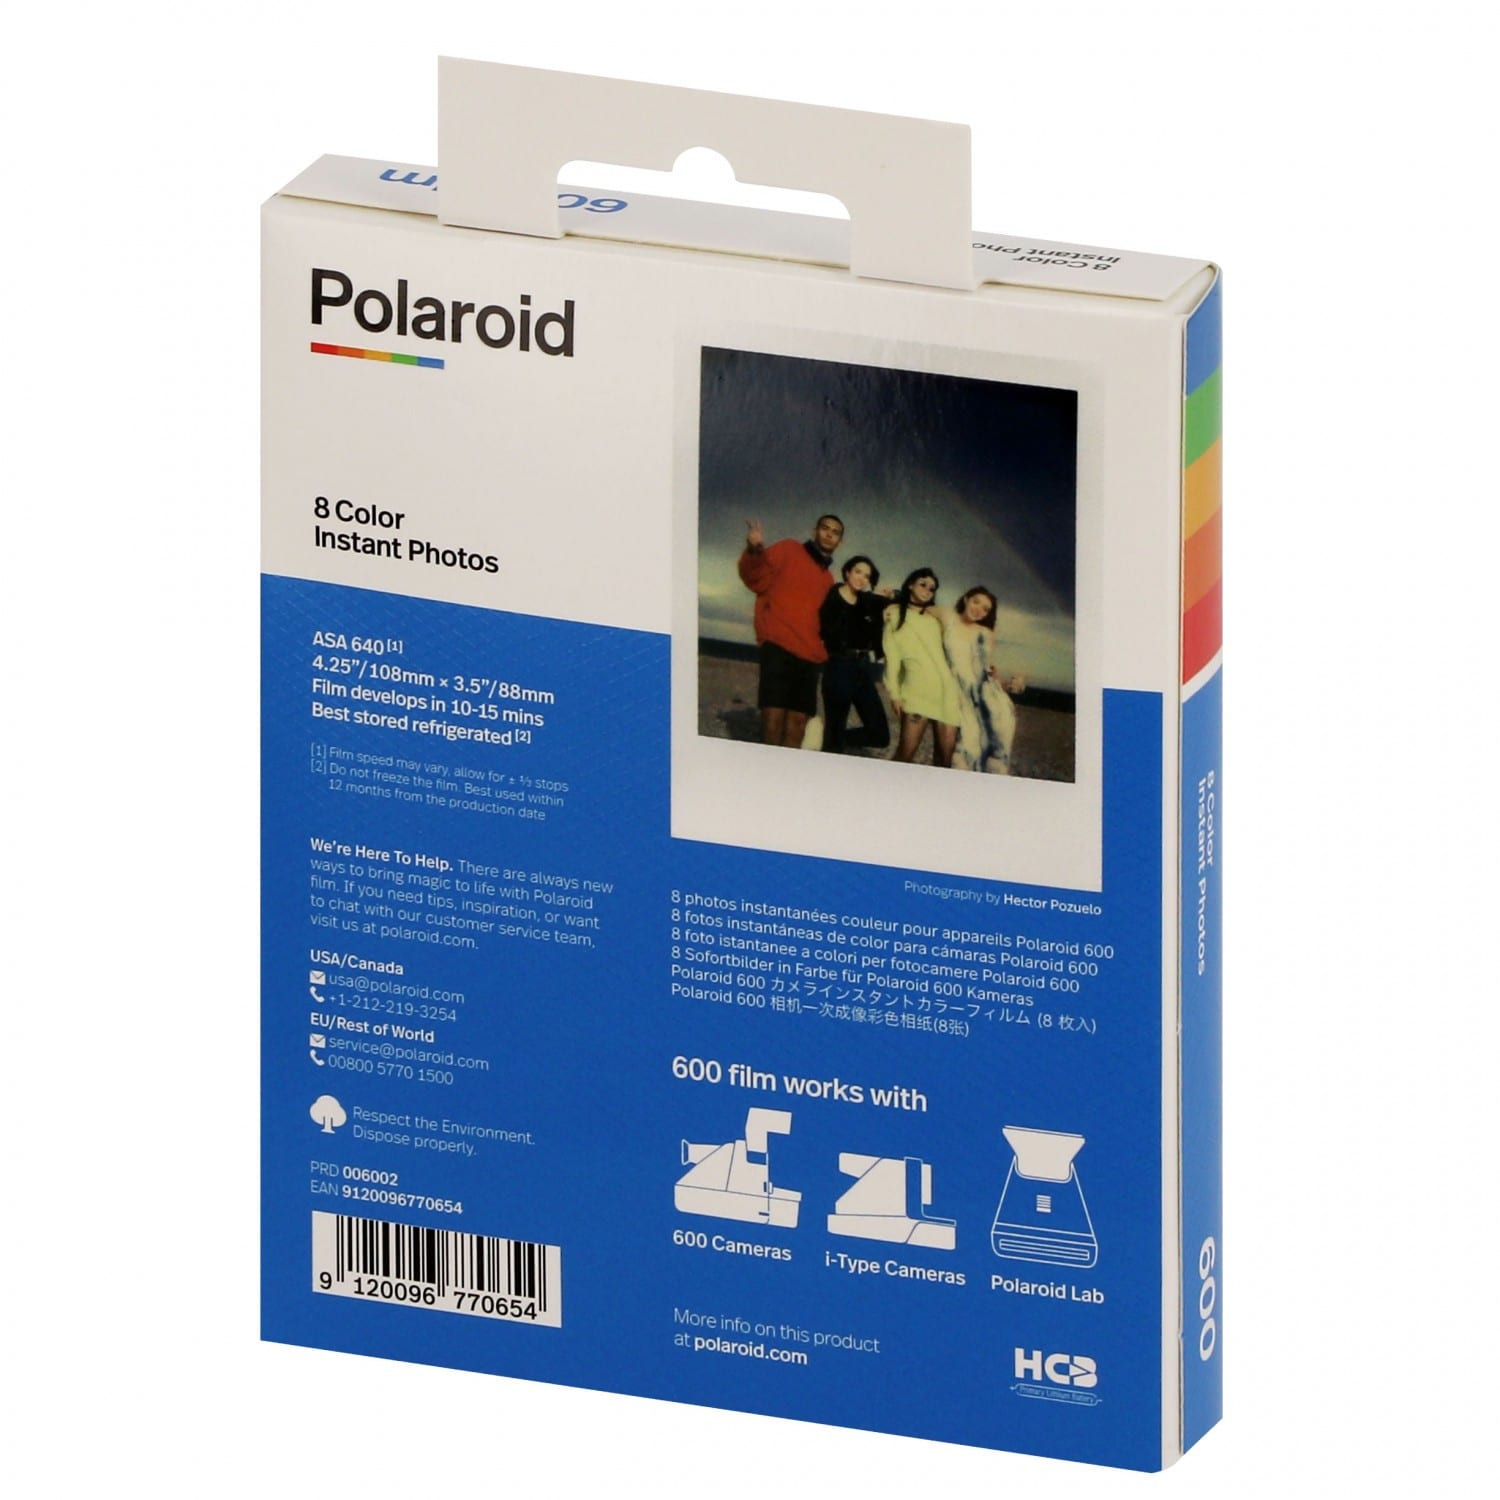 Polaroid Film Couleur 600